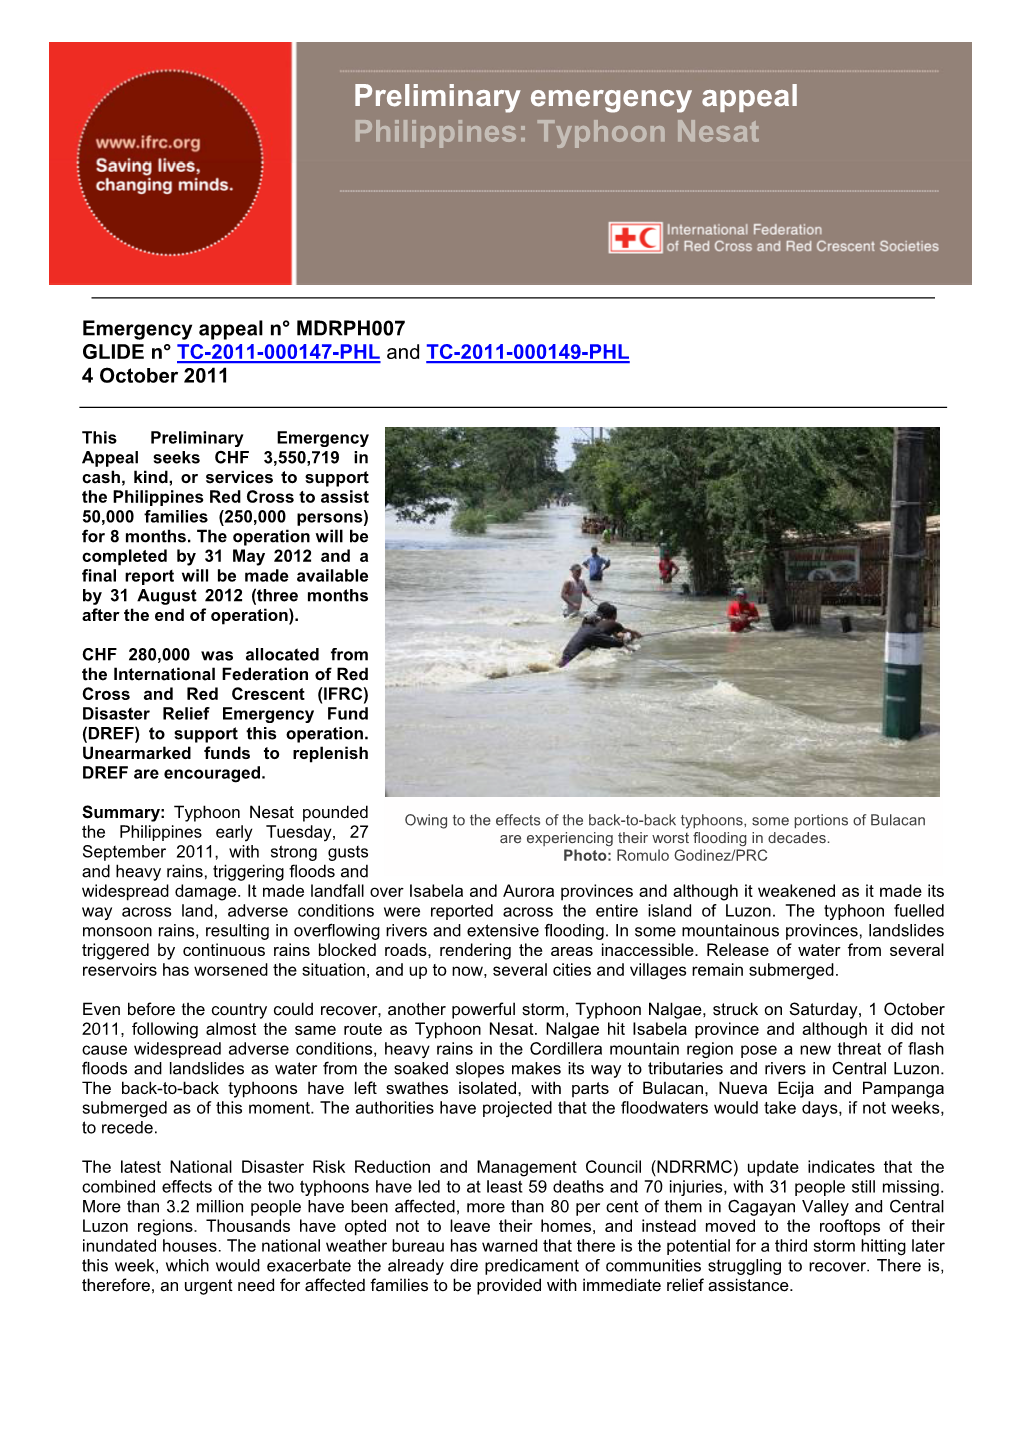 Emergency Appeal Philippines: Typhoon Nesat